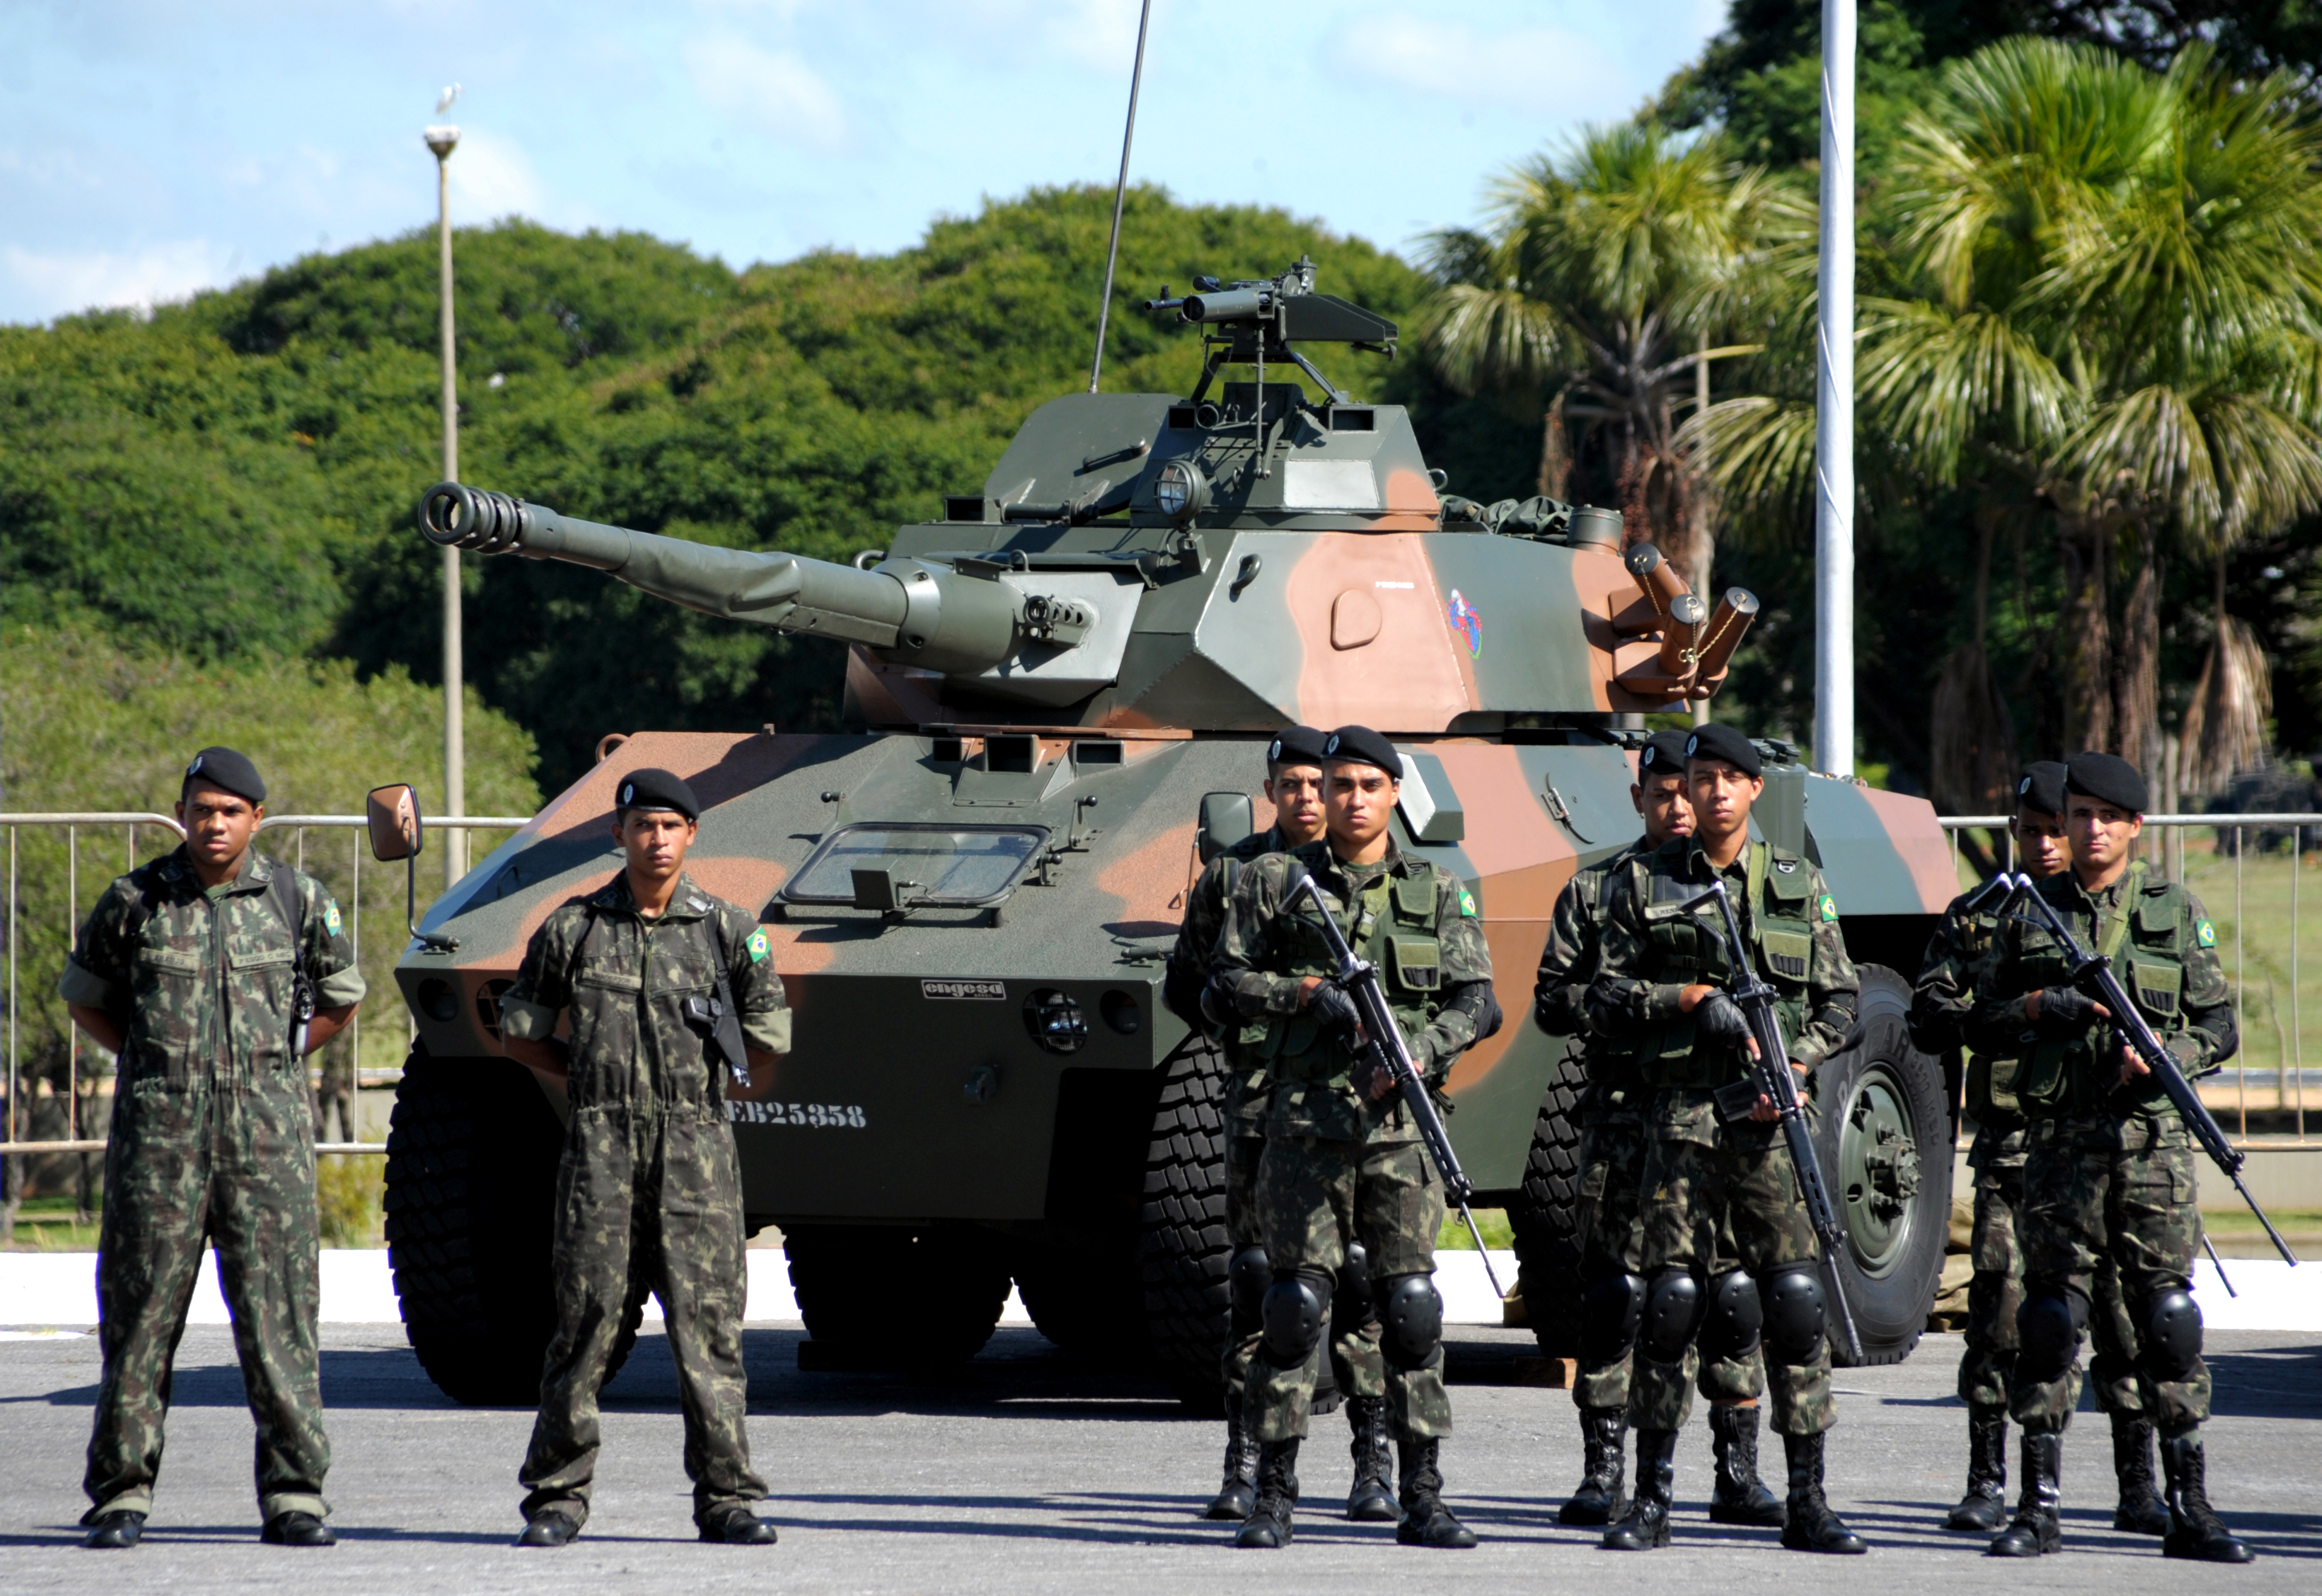 Fotos de Exército brasileiro, Imagens de Exército brasileiro sem royalties